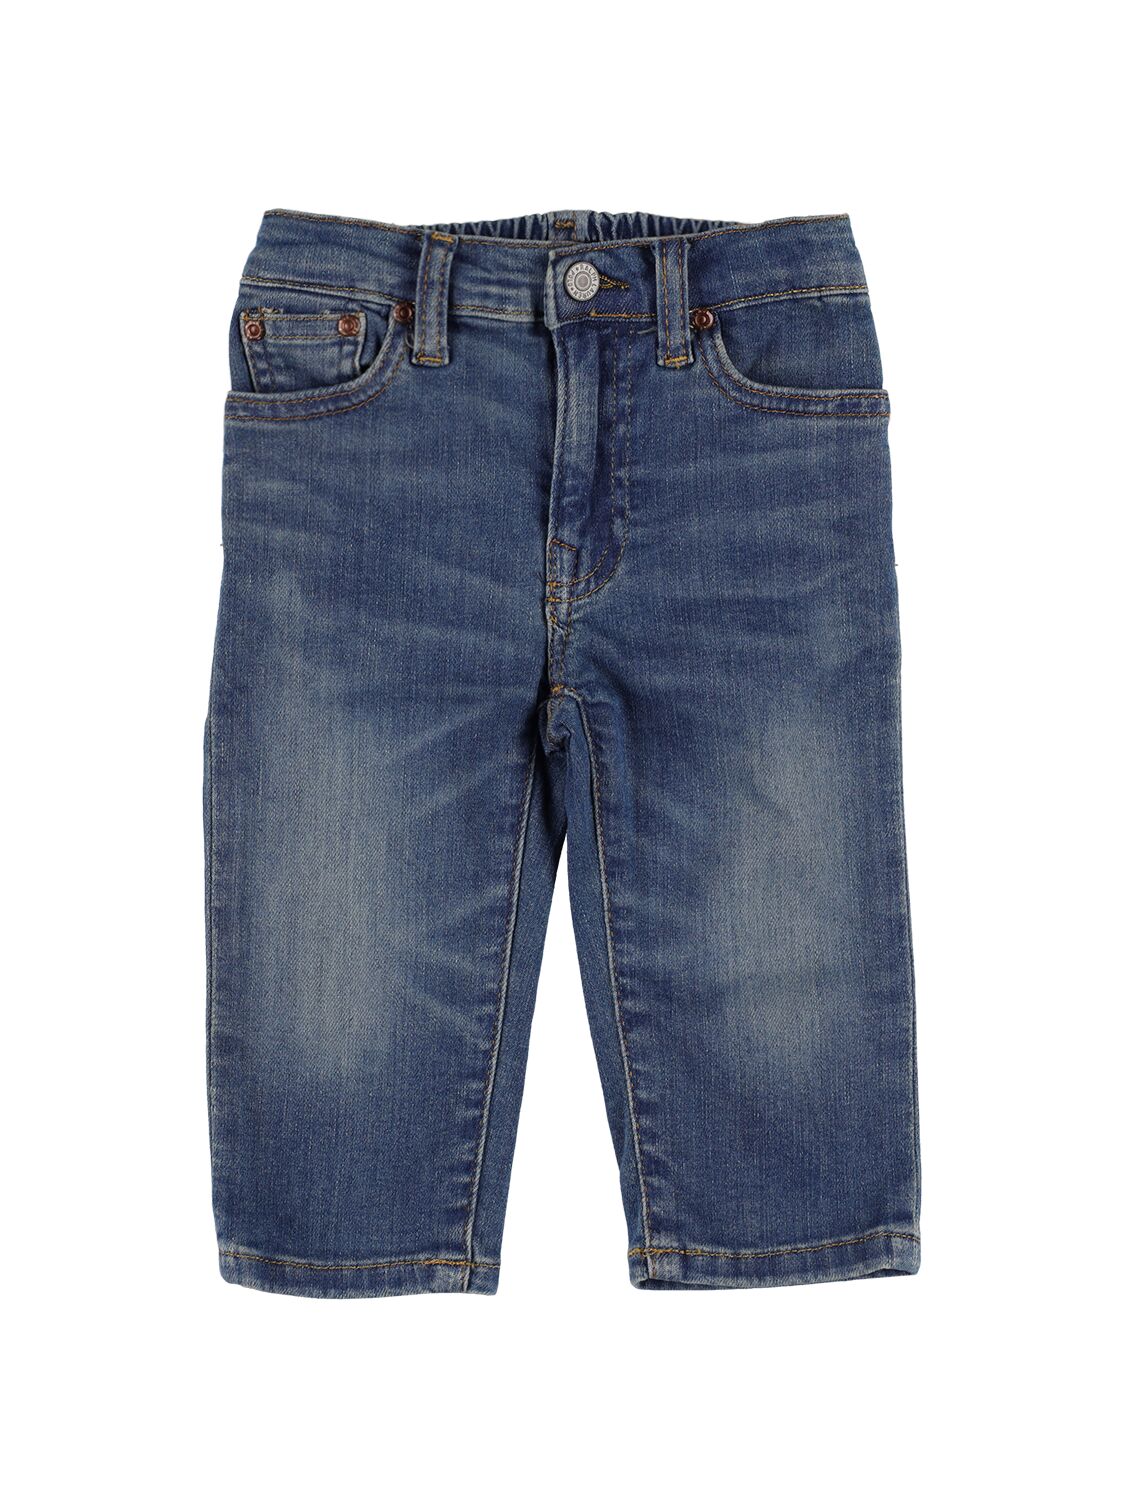 Image of Stonewashed Cotton Denim Jeans